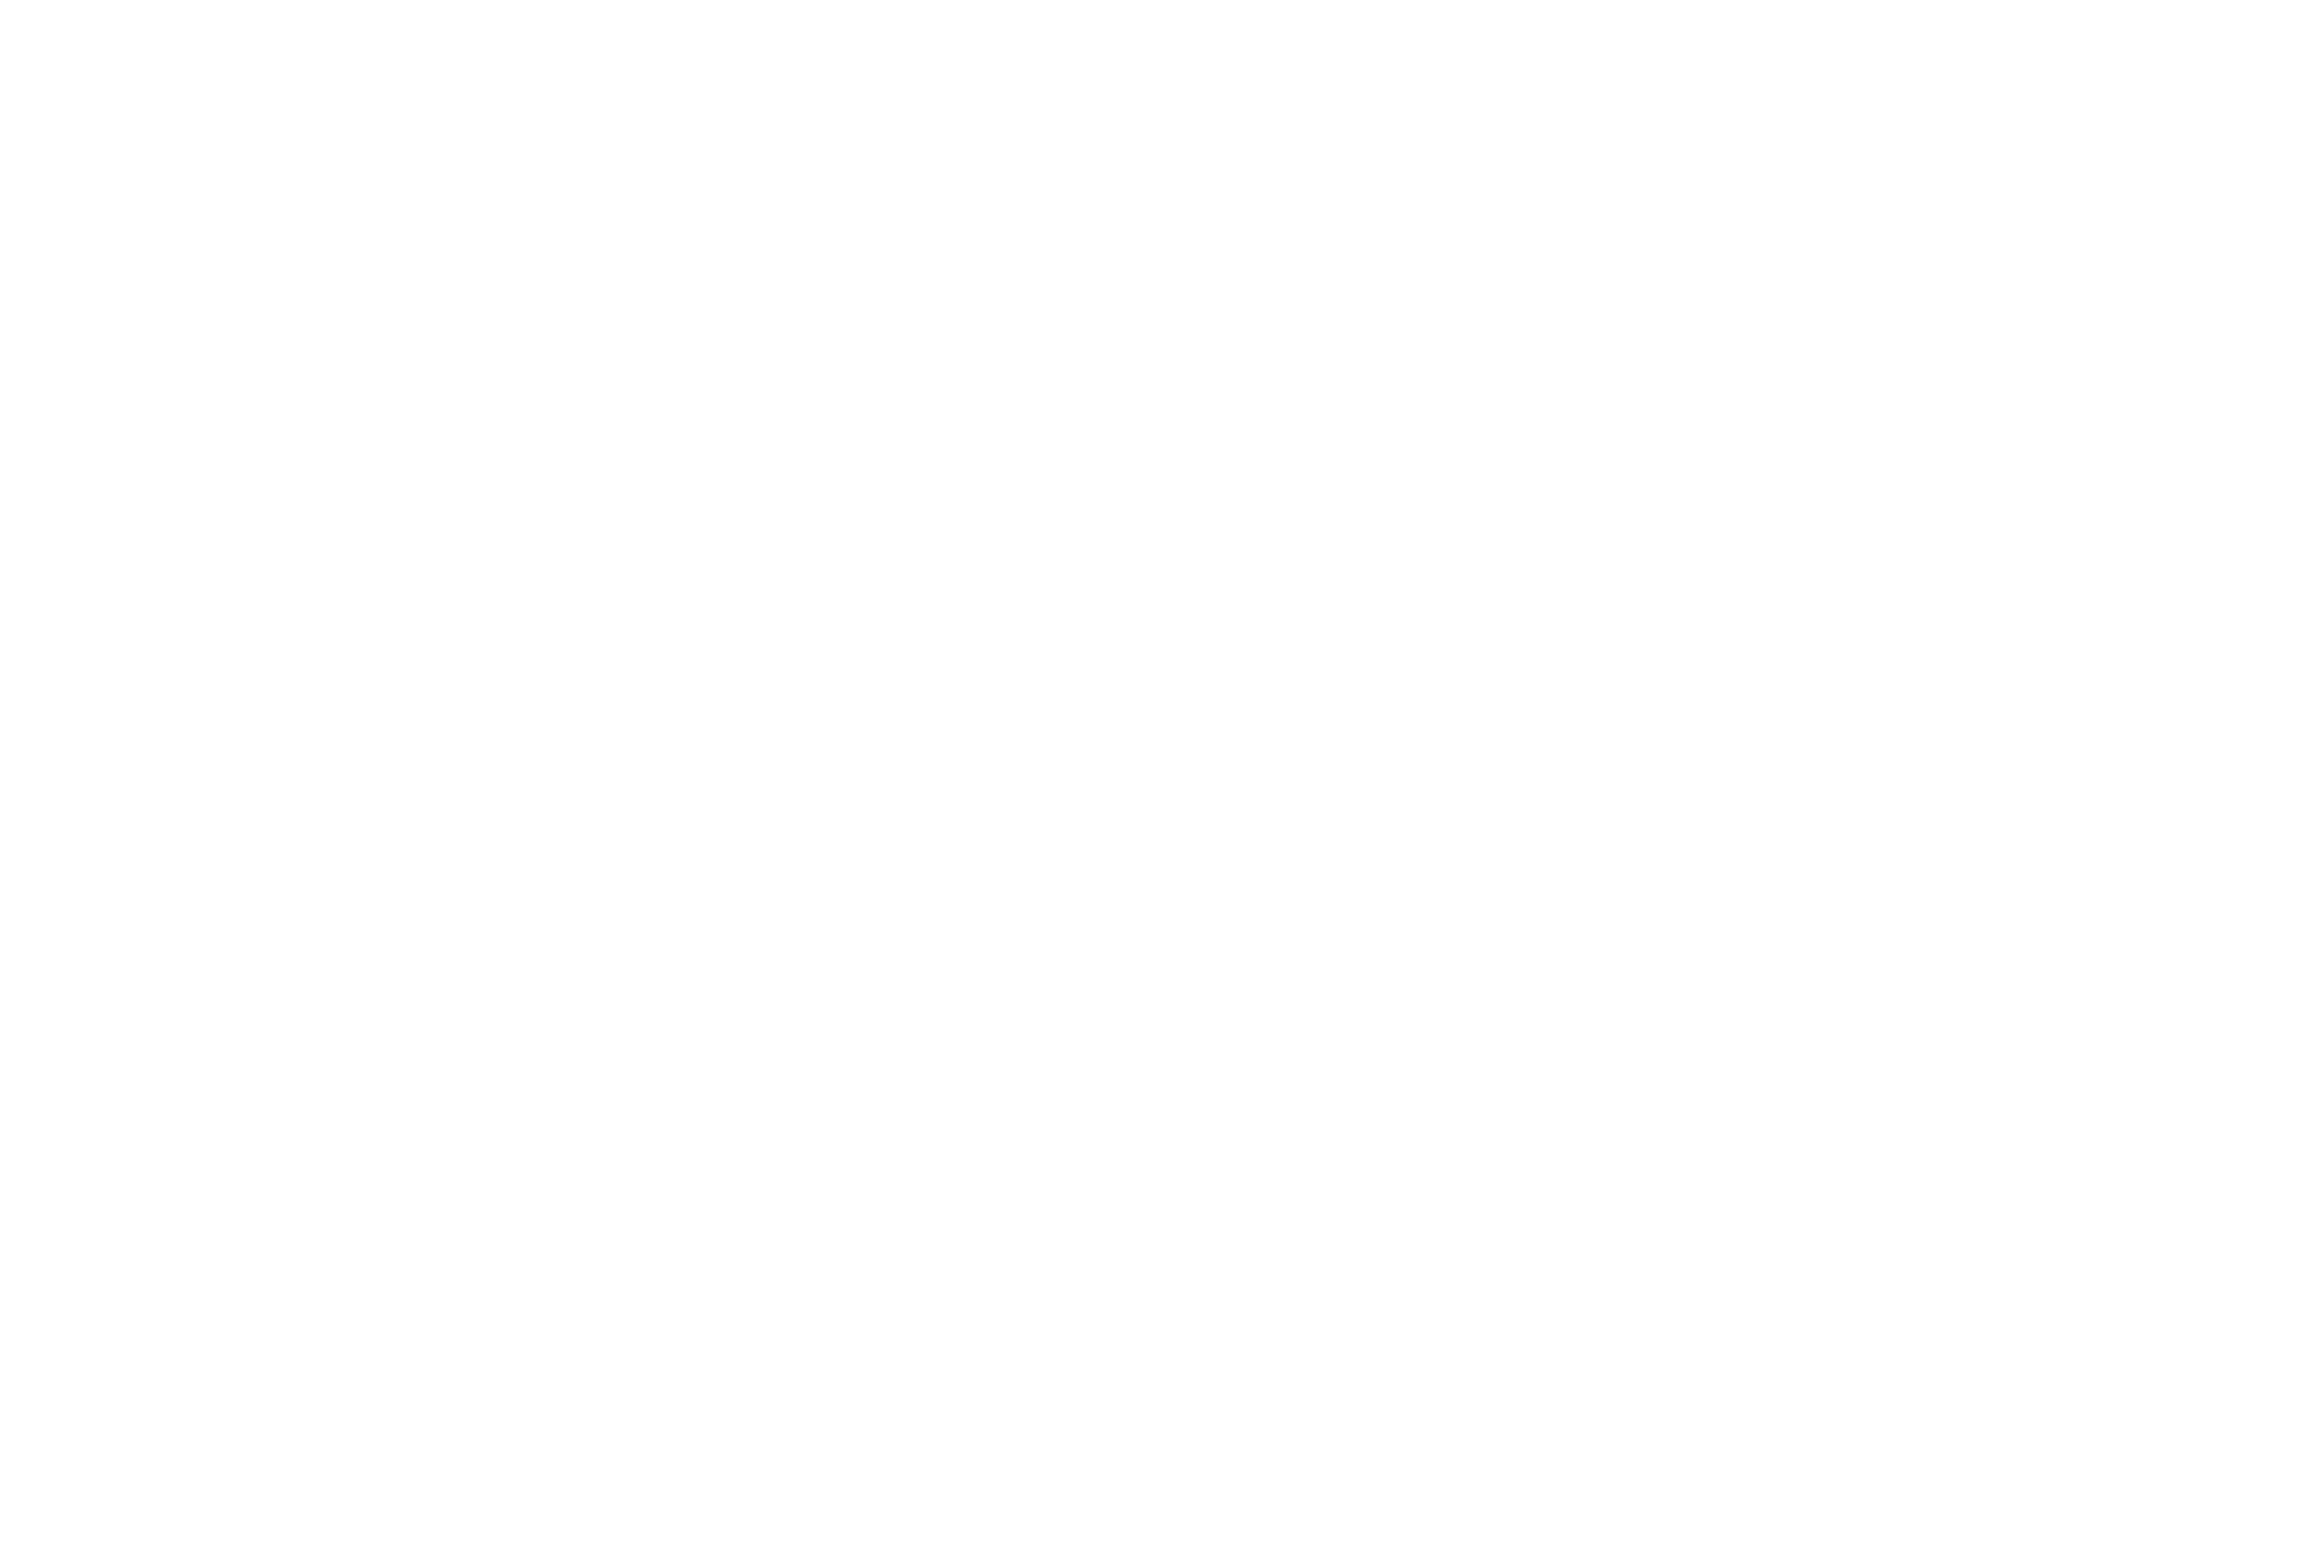 Mystery School